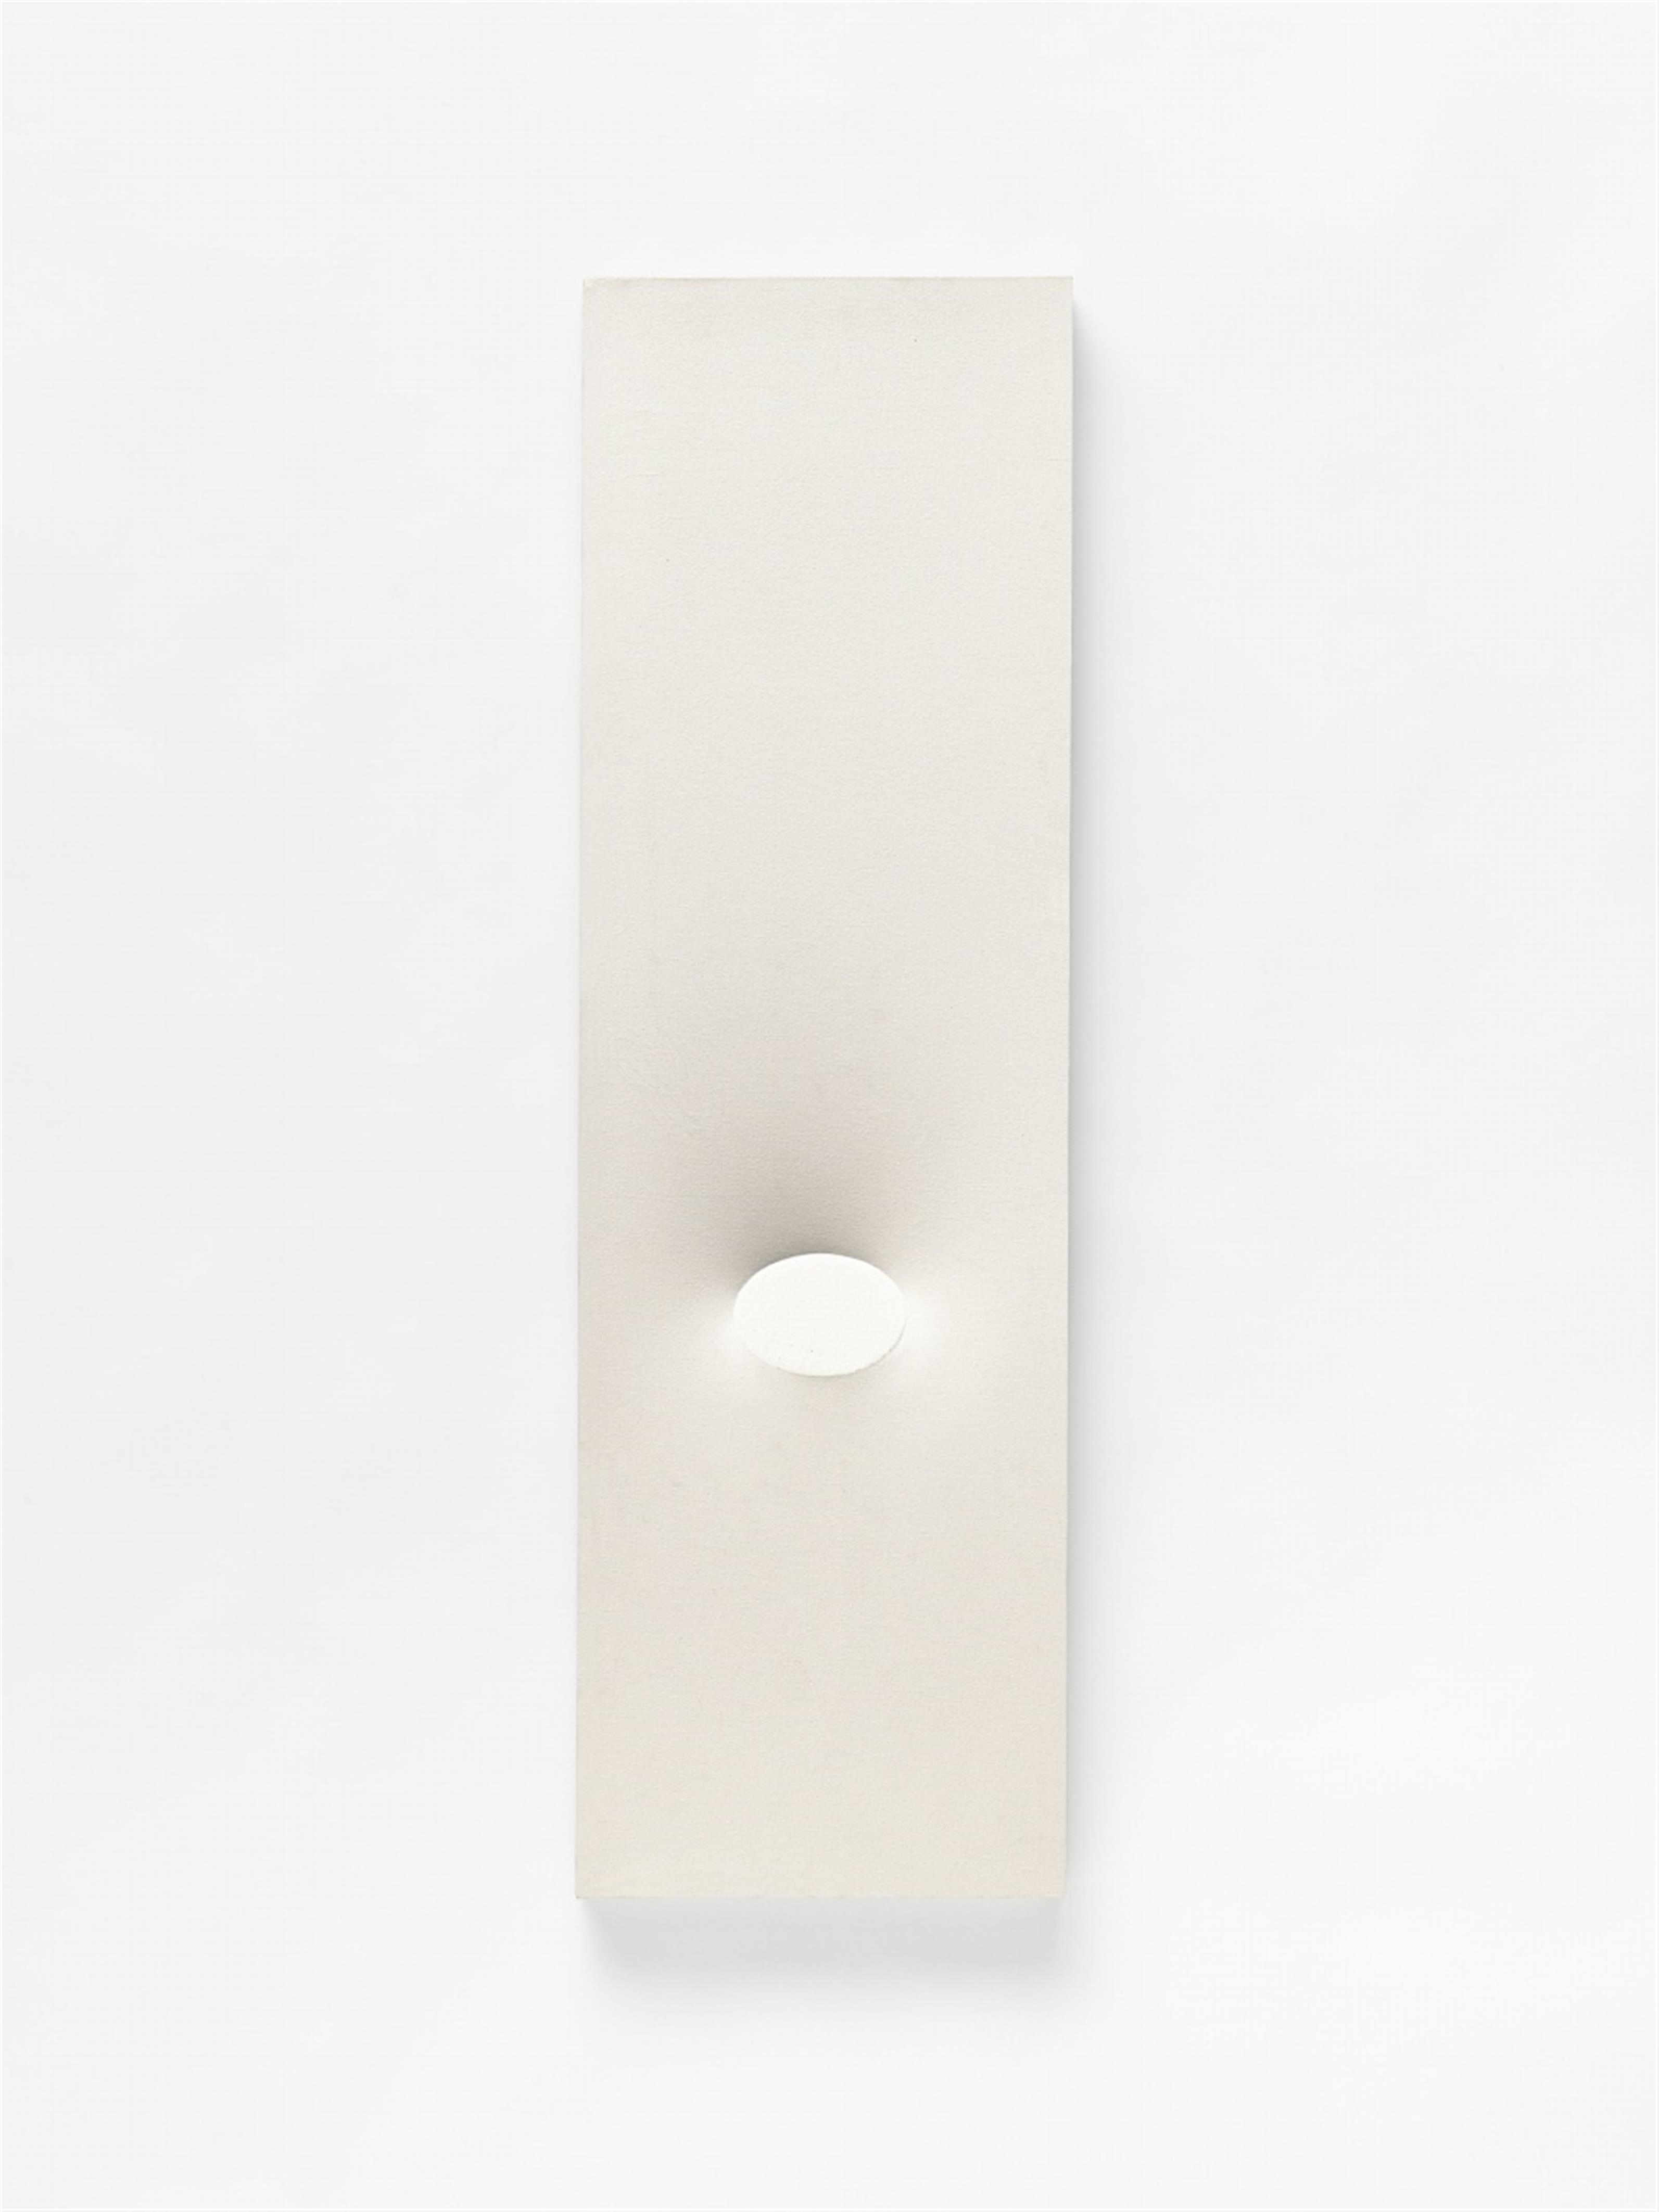 Turi Simeti - Untitled (Un ovale bianco) - image-1